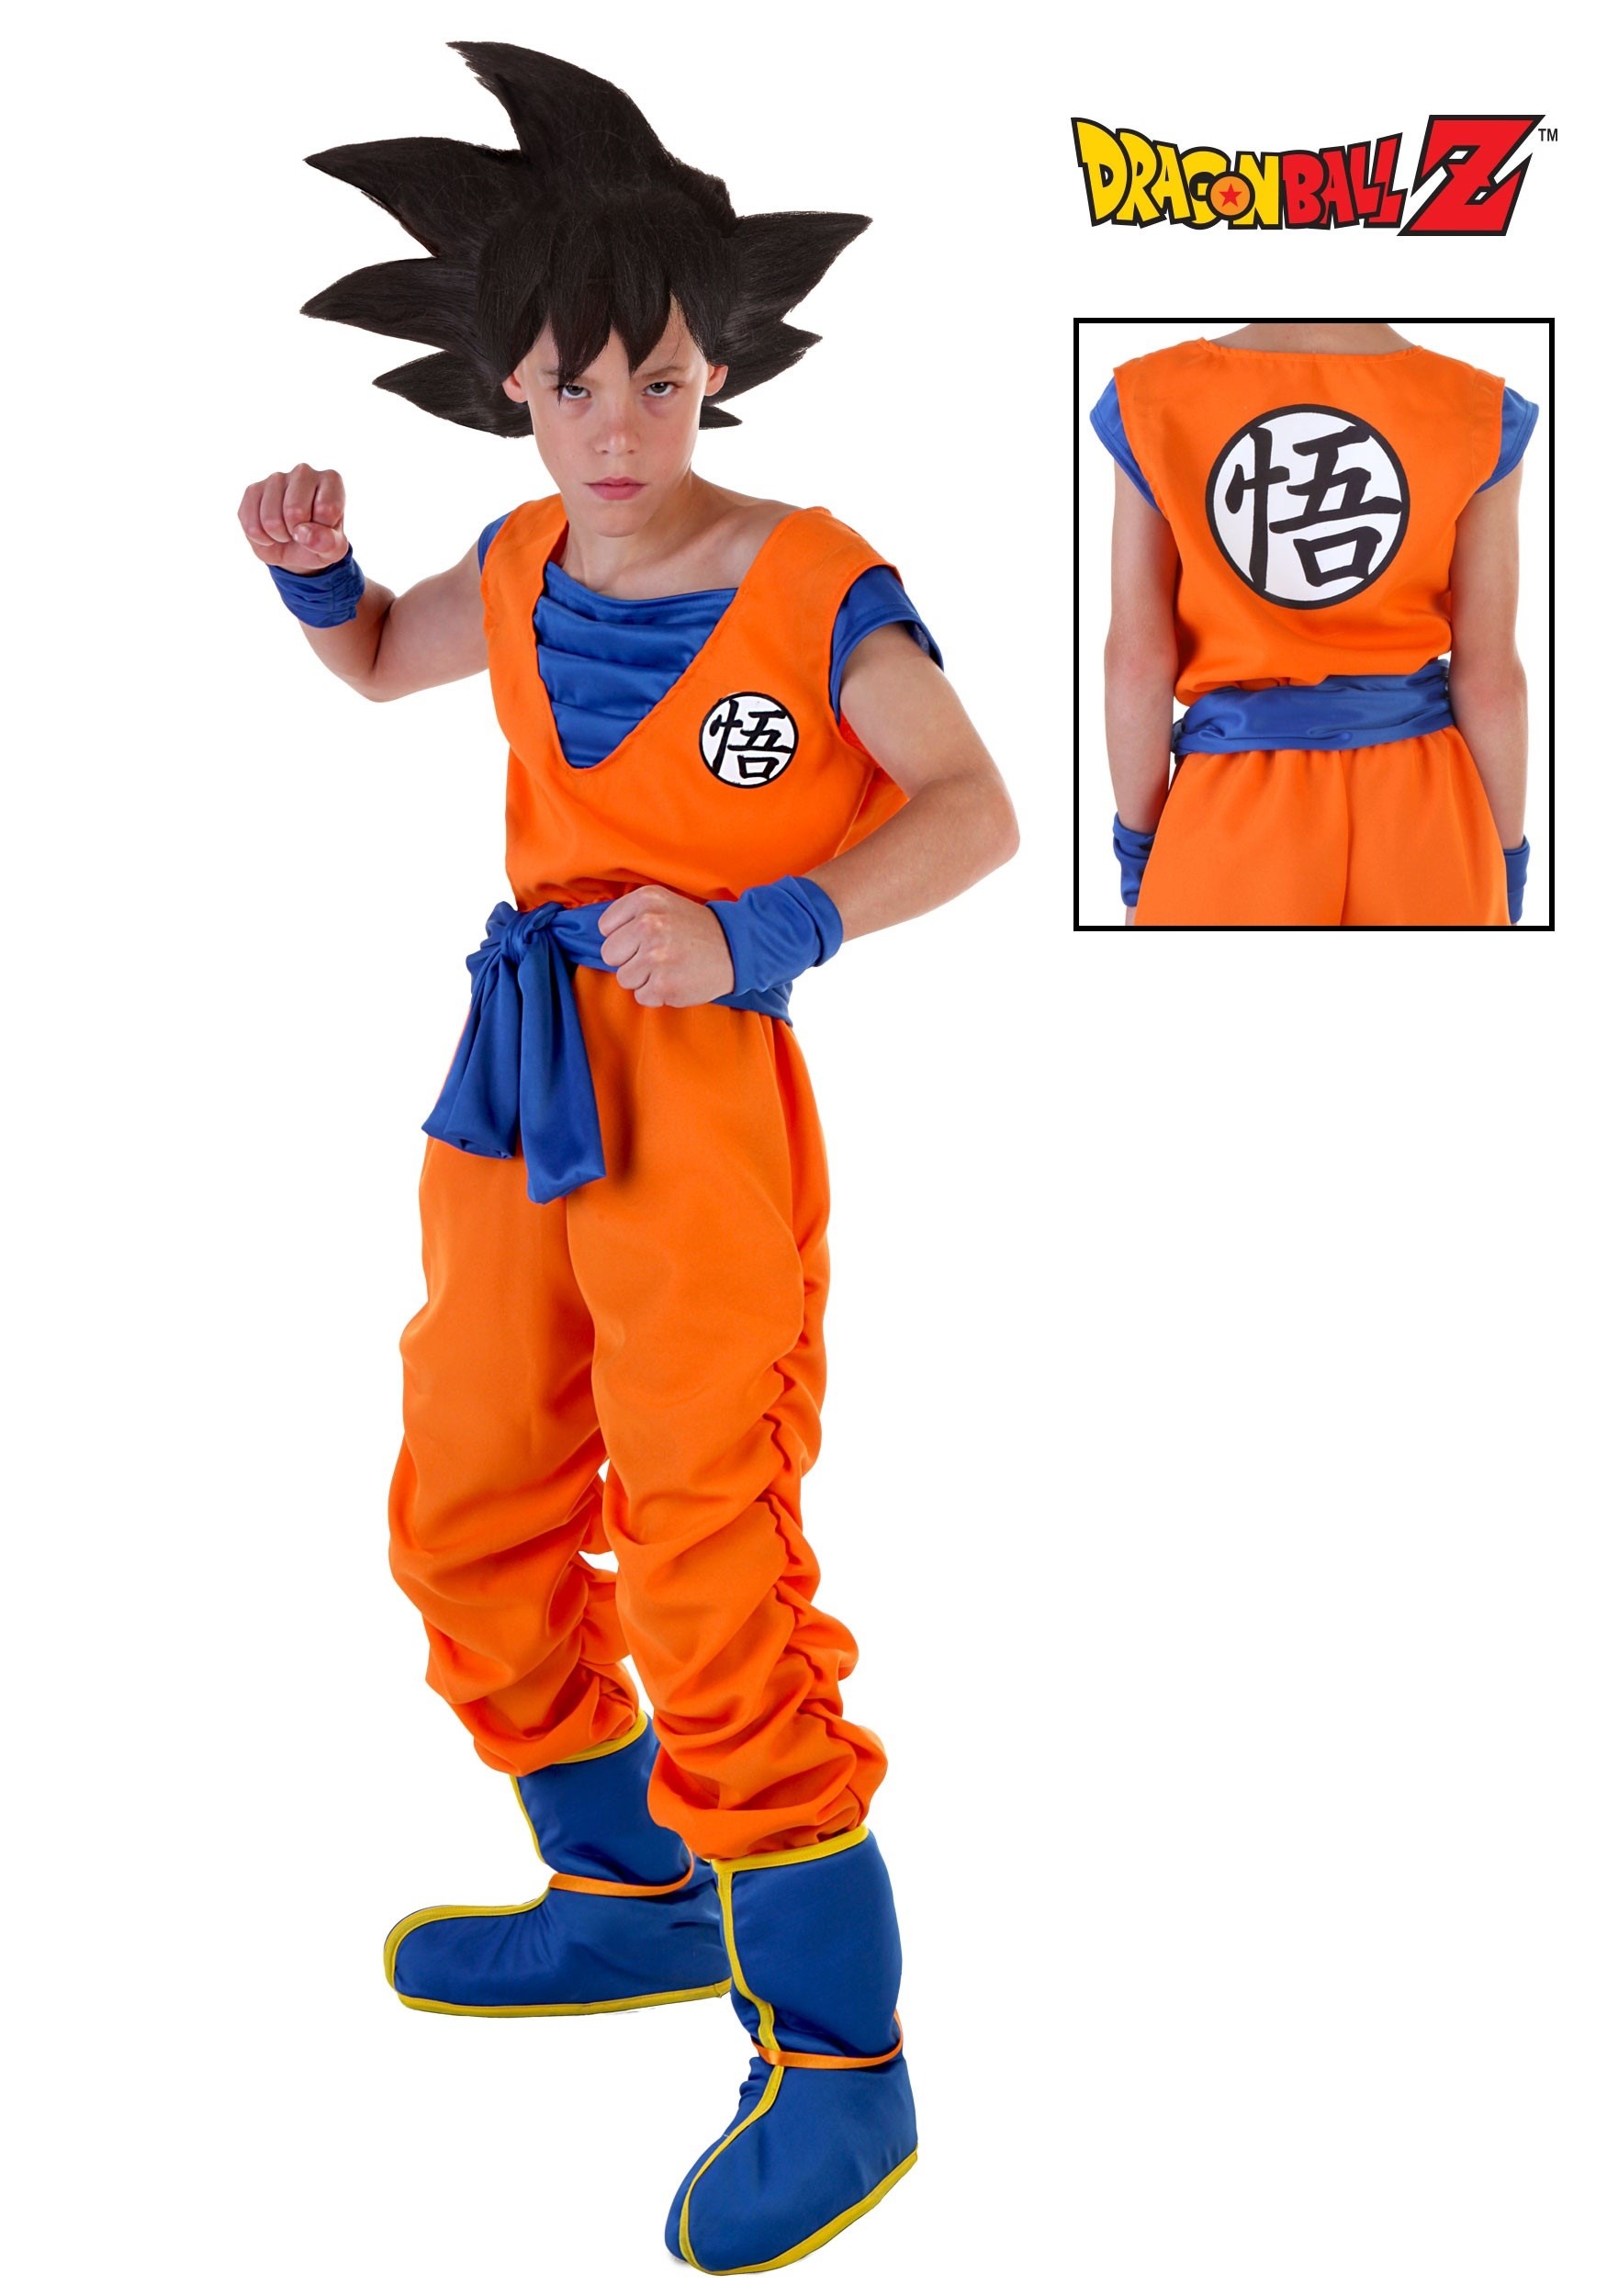 Costume Son Goku - Dragon ball Z